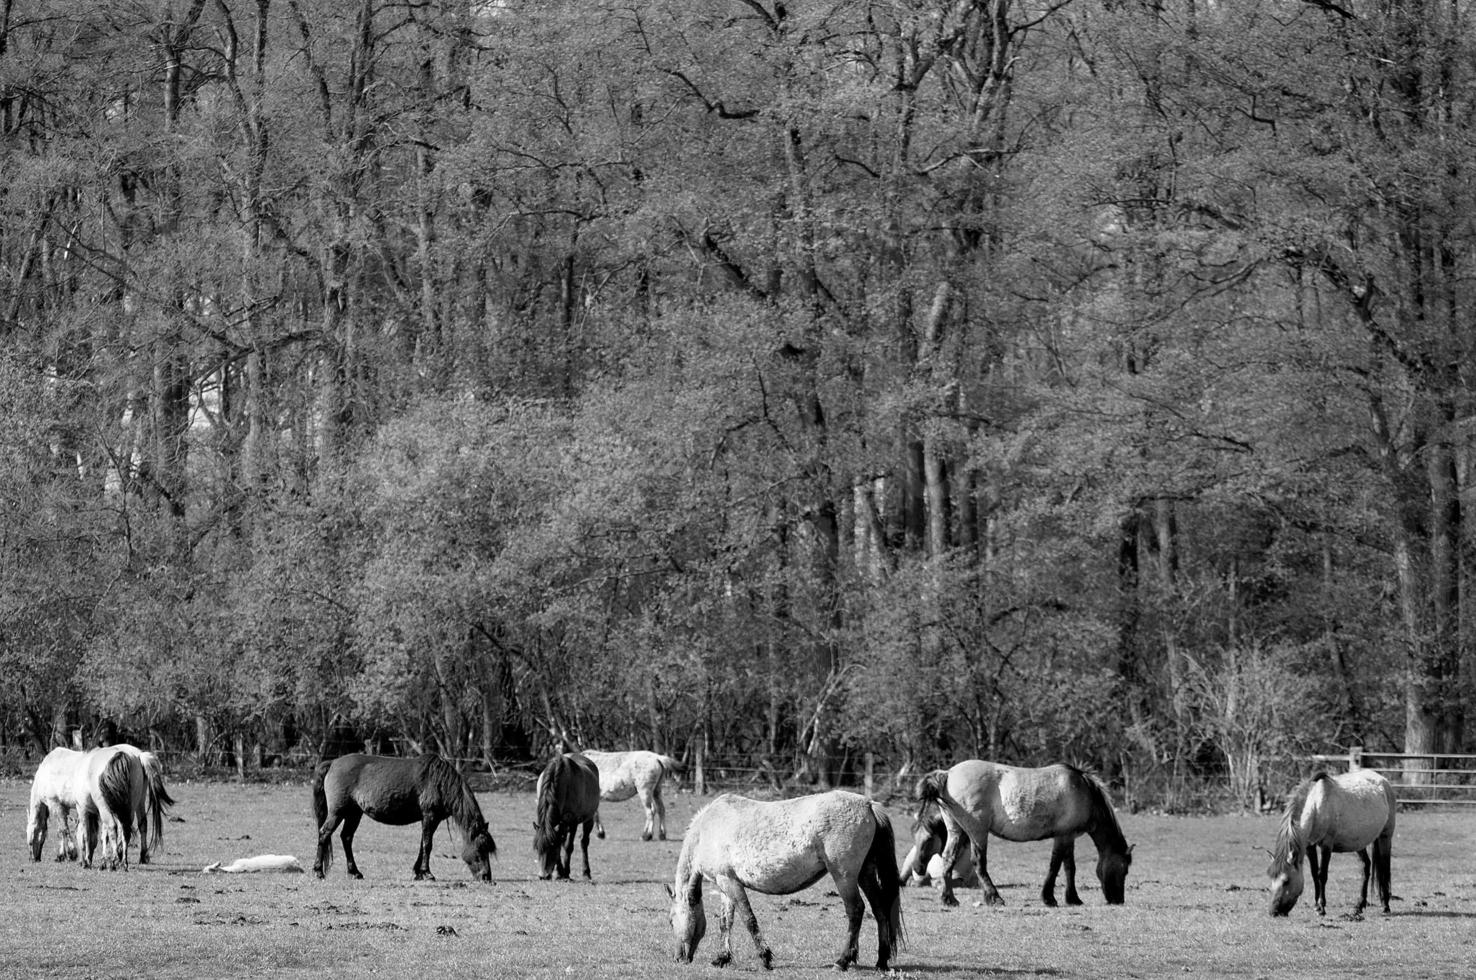 paarden in Duitsland foto